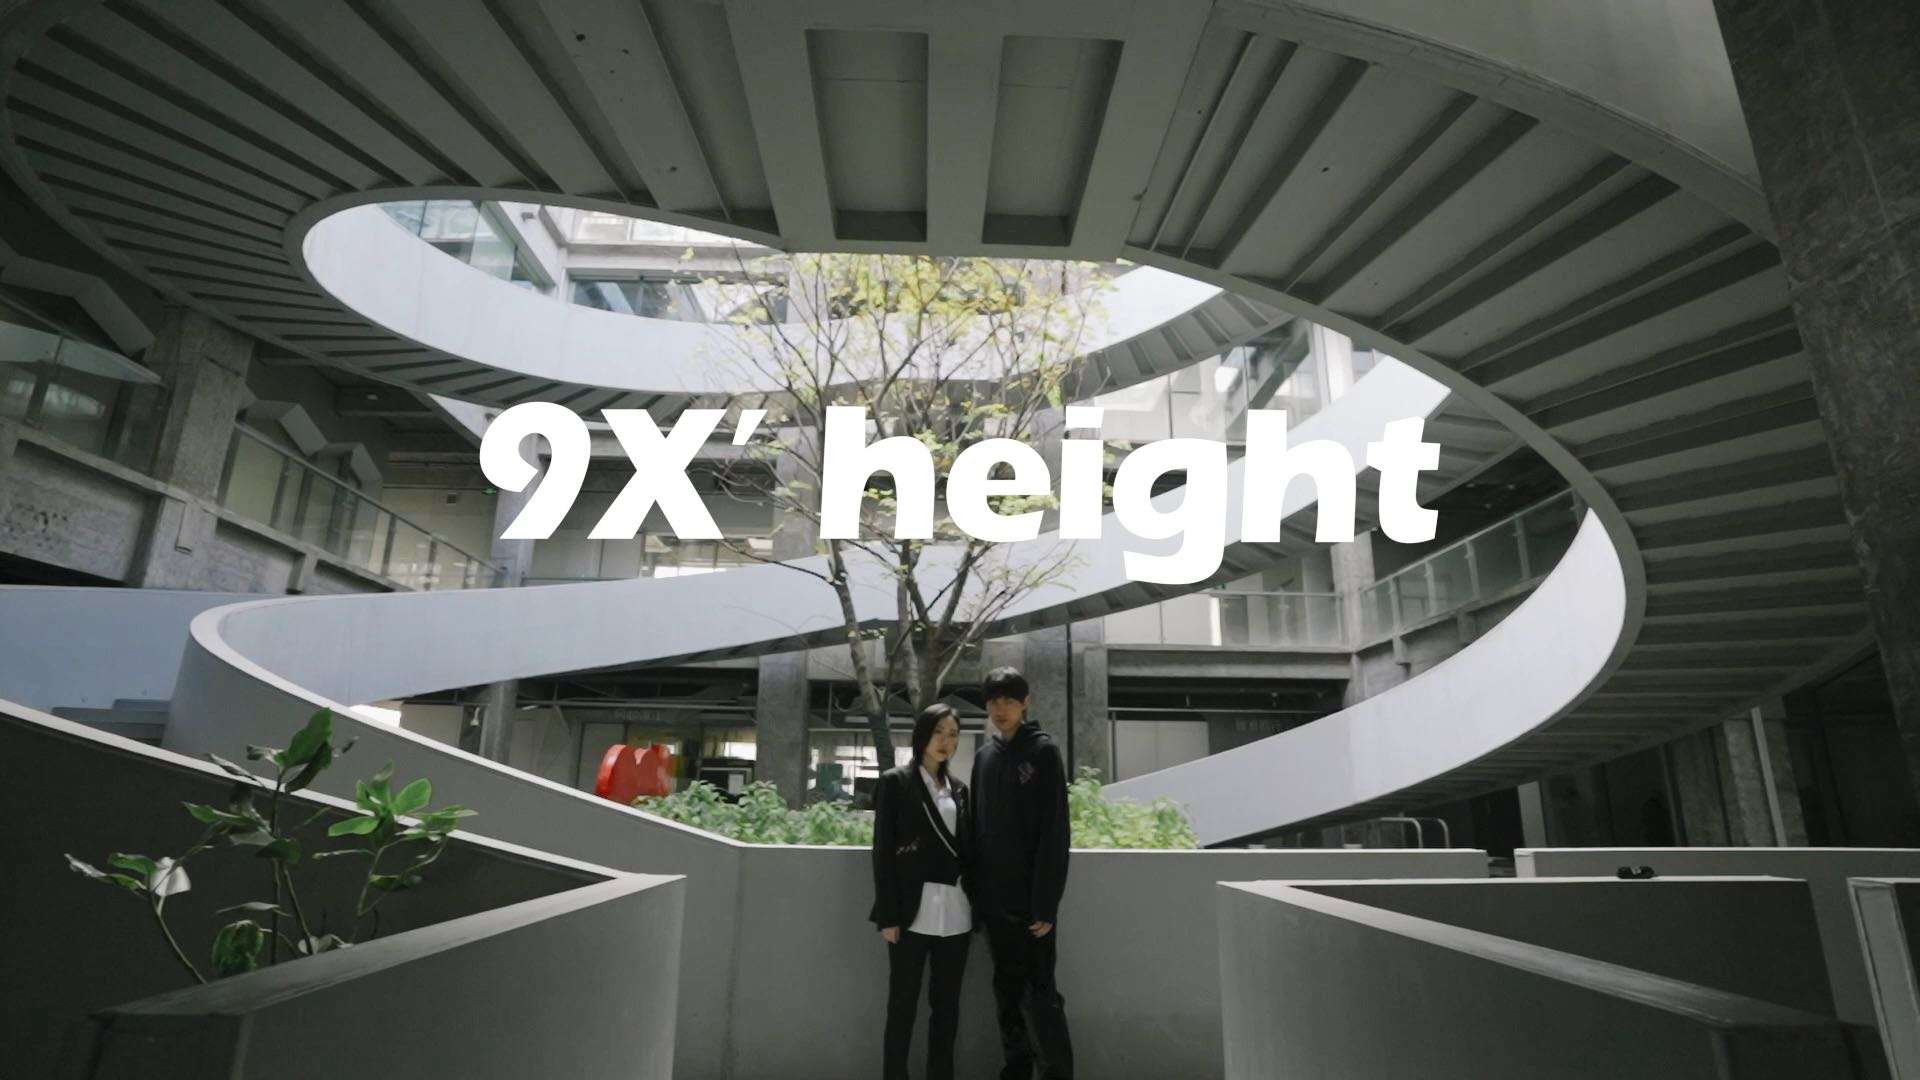 9X height